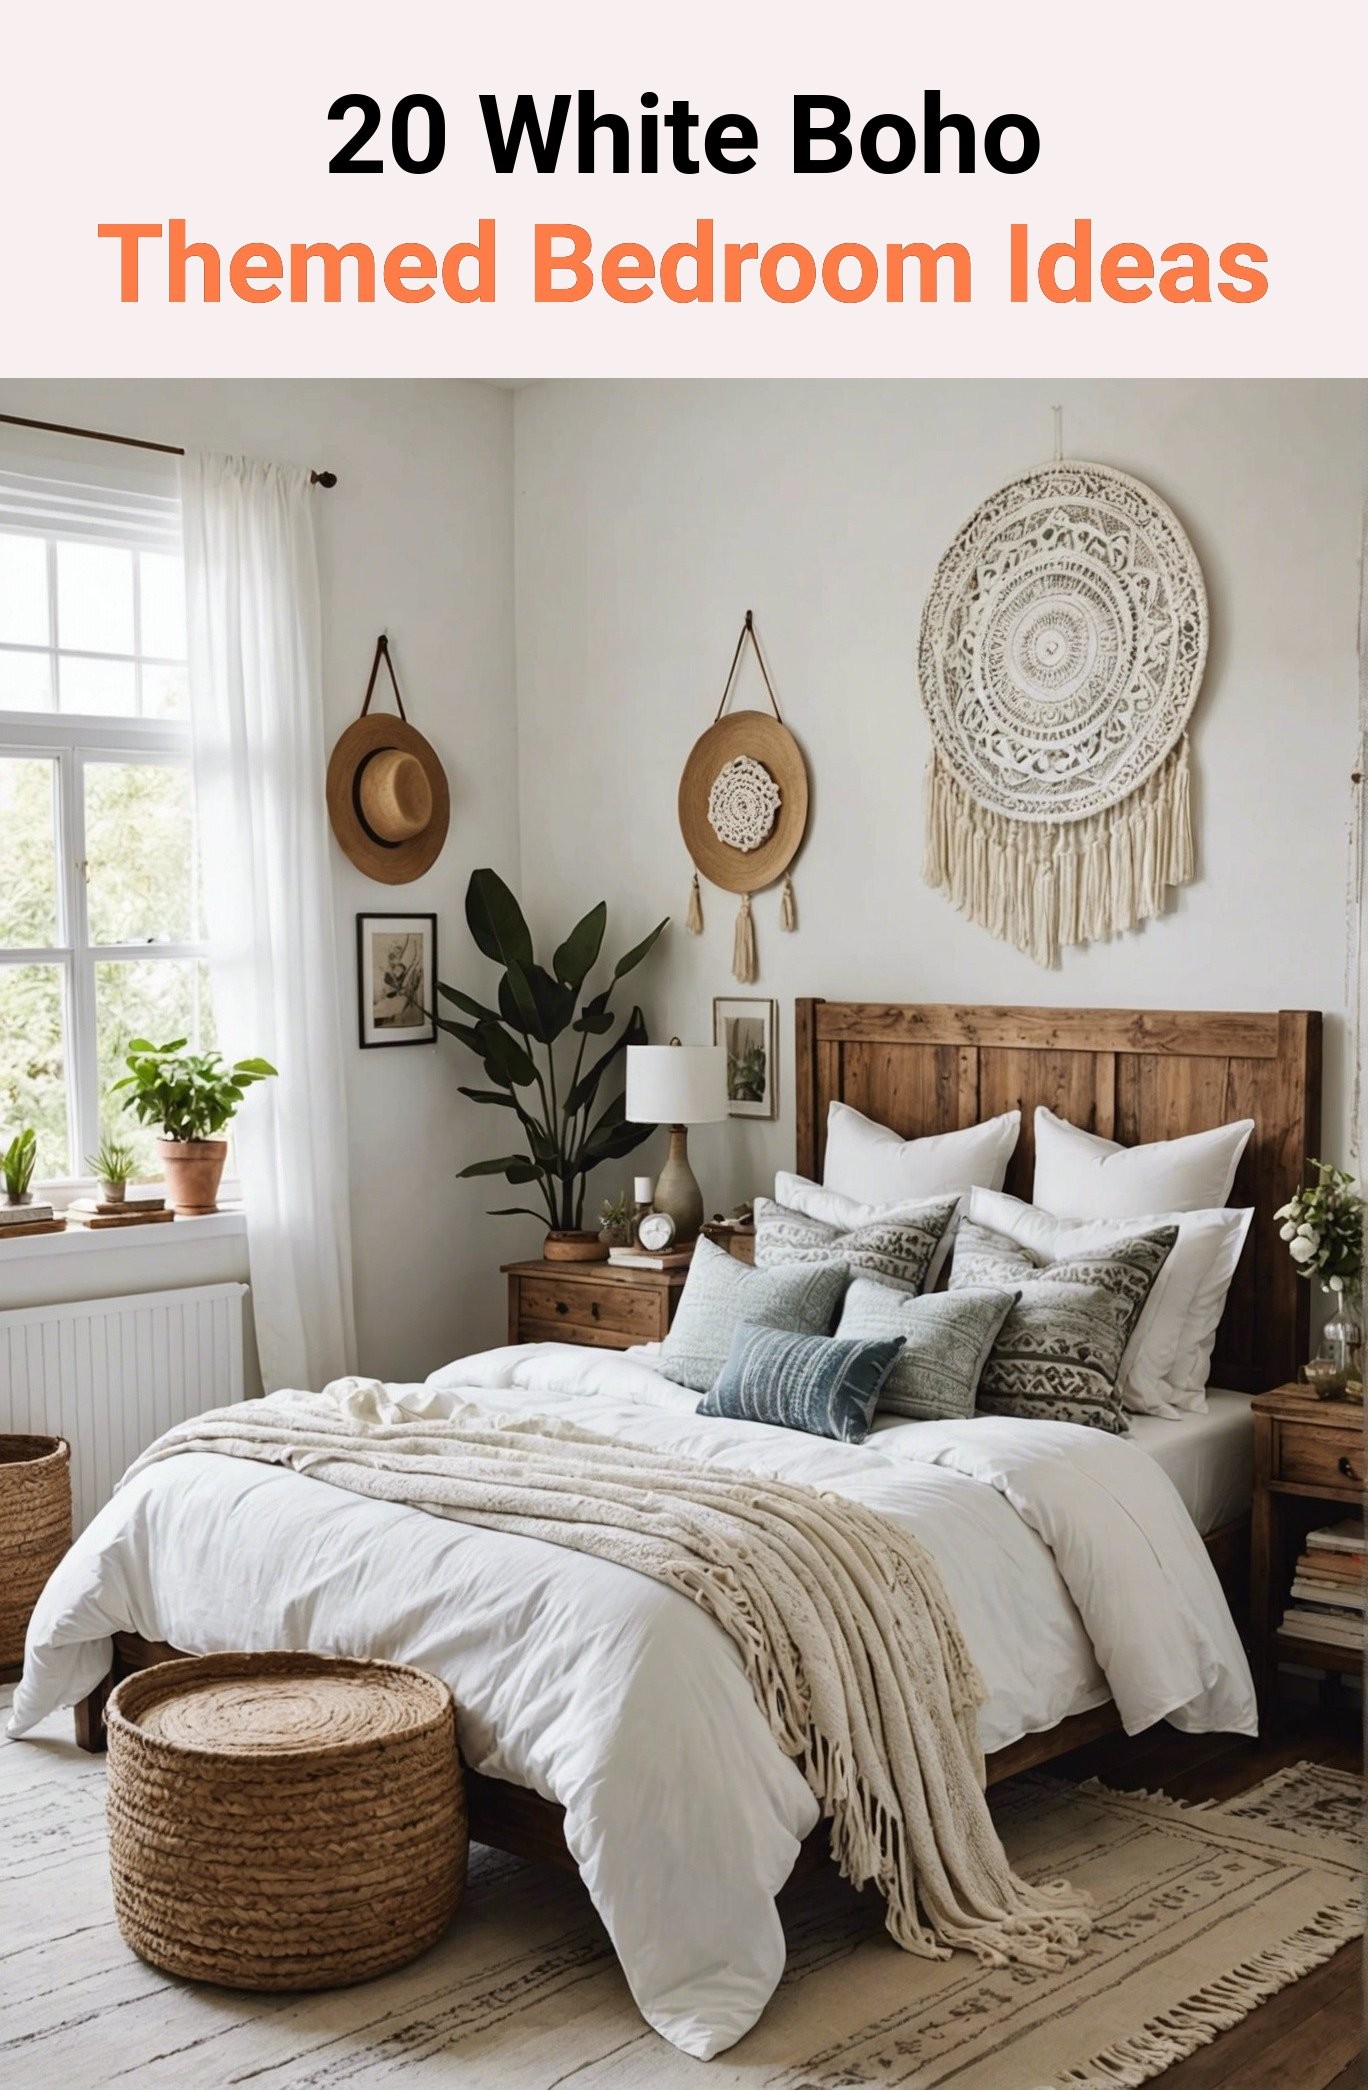 20 White Boho Themed Bedroom Ideas